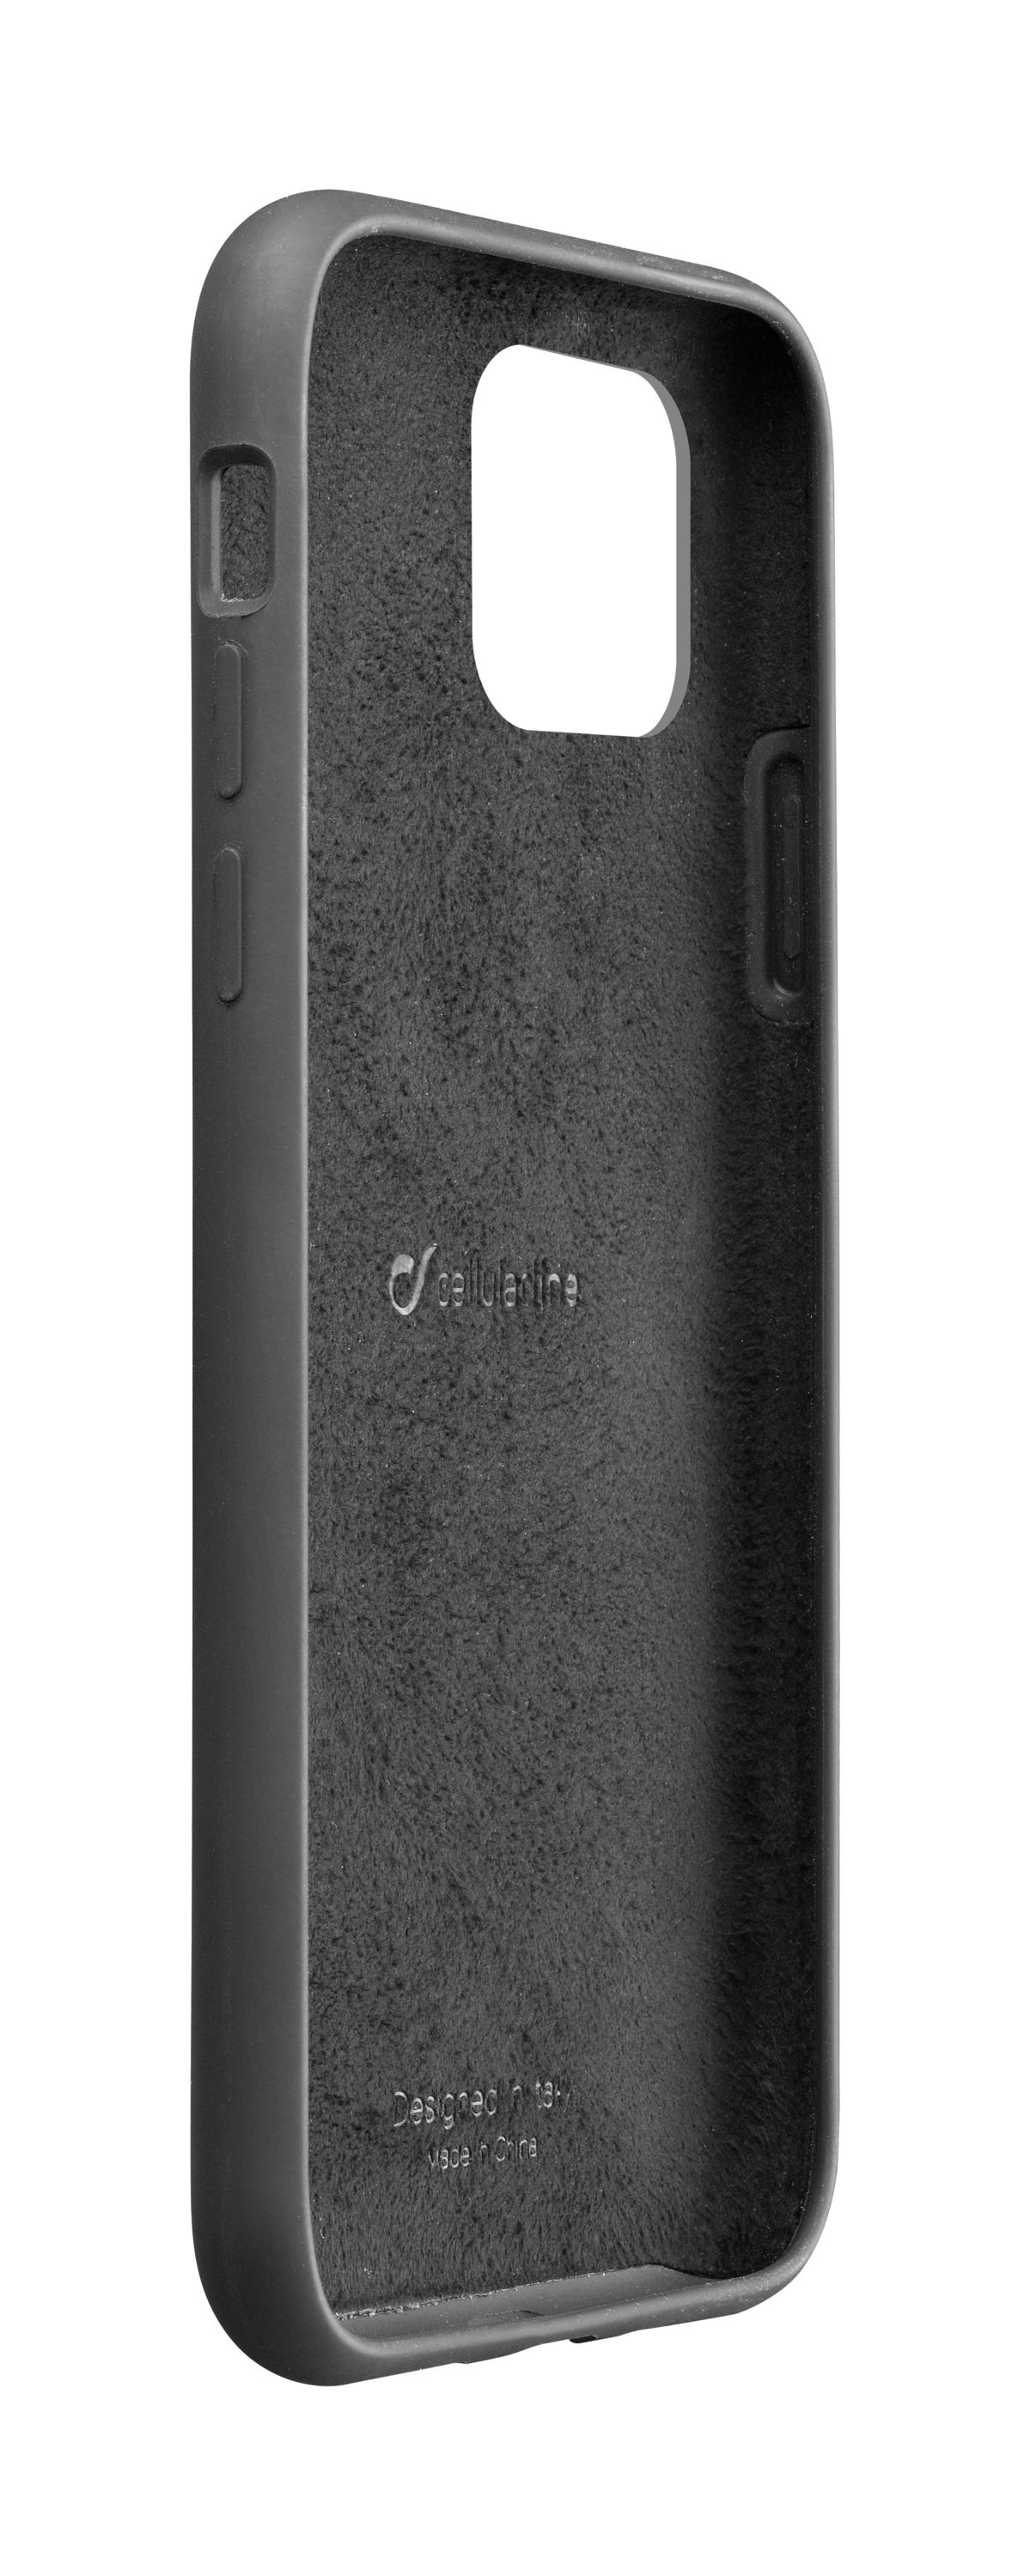 iPhone 11 Pro Max, case sensation, black